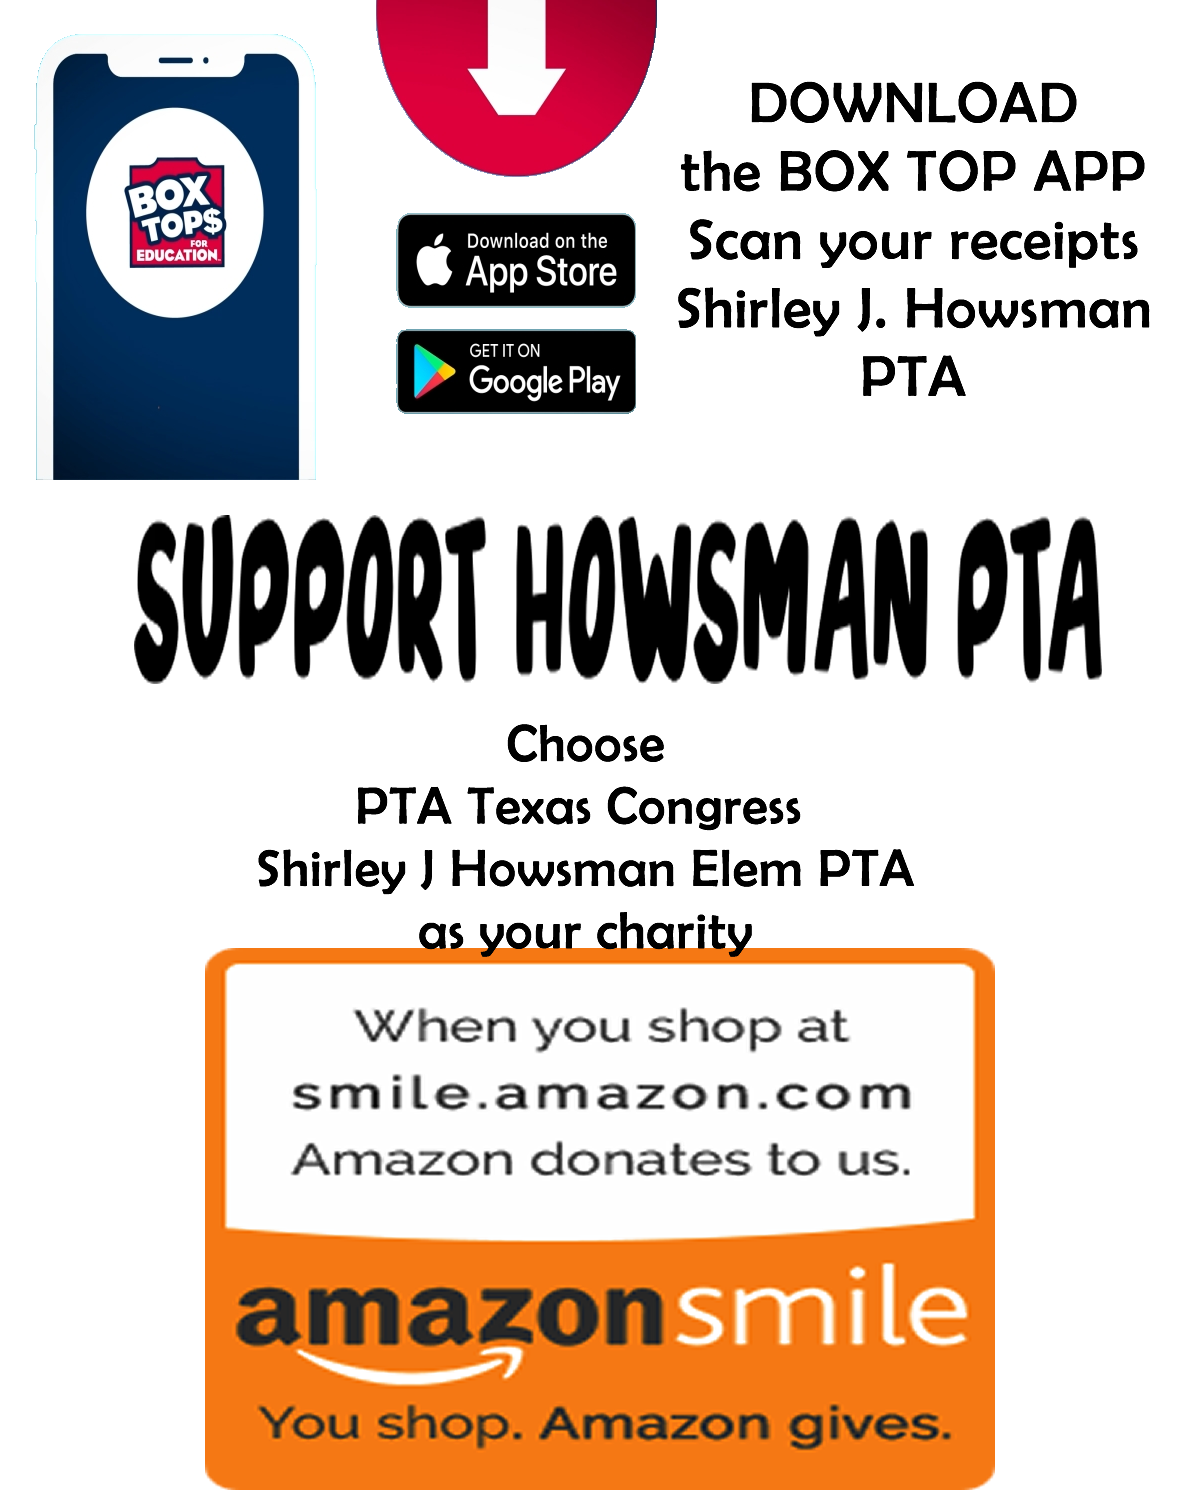 Support Howsman PTA image